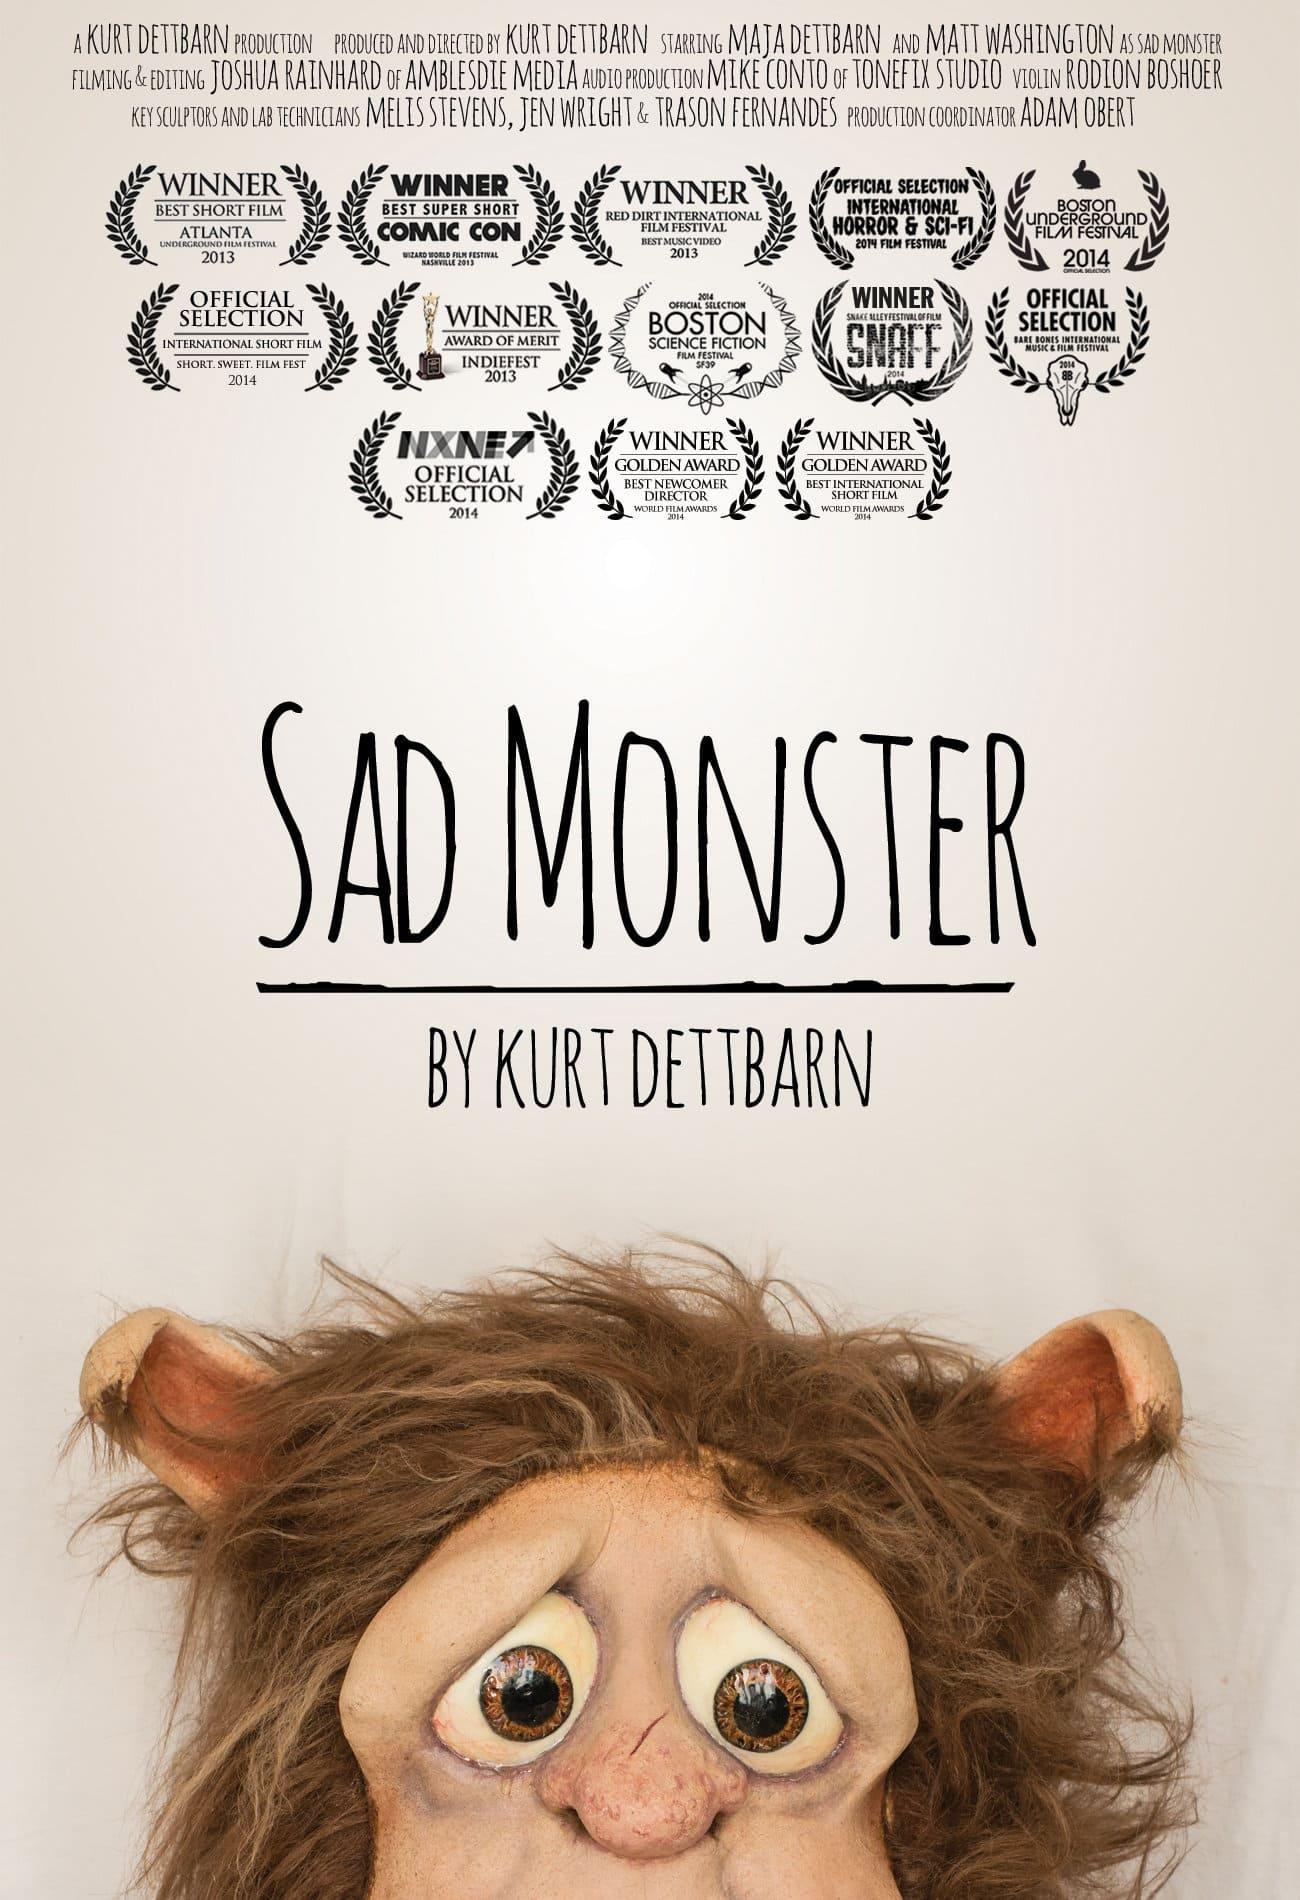 The Sad Monster poster